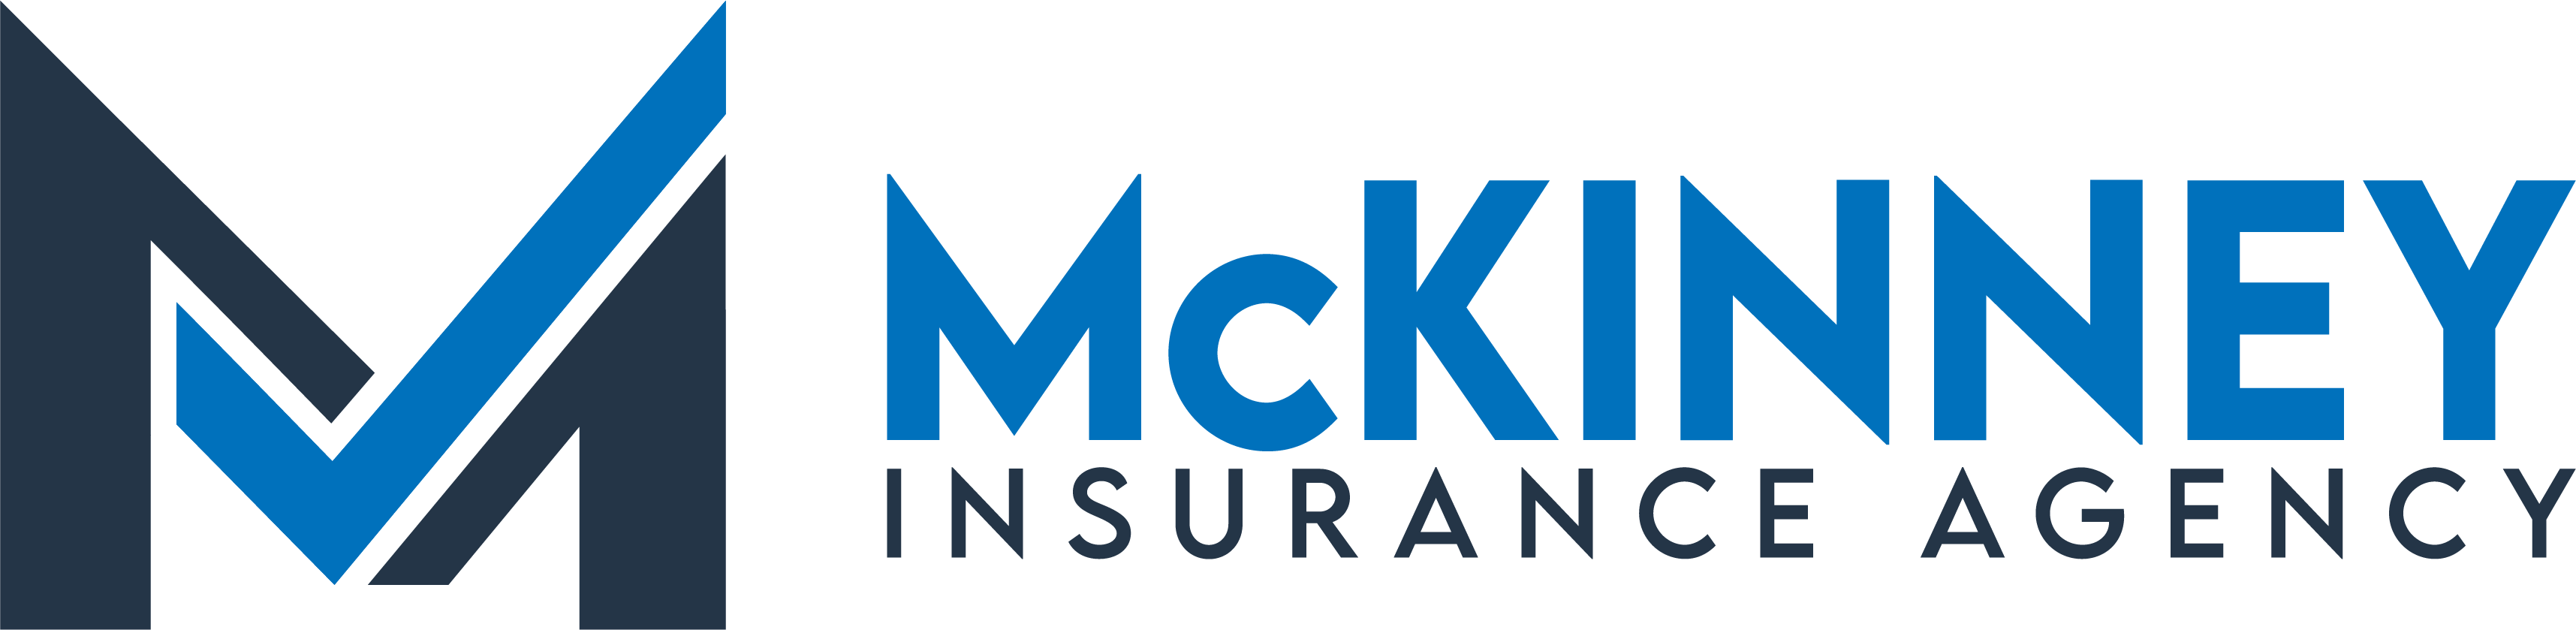 McKinney Insurance Agency